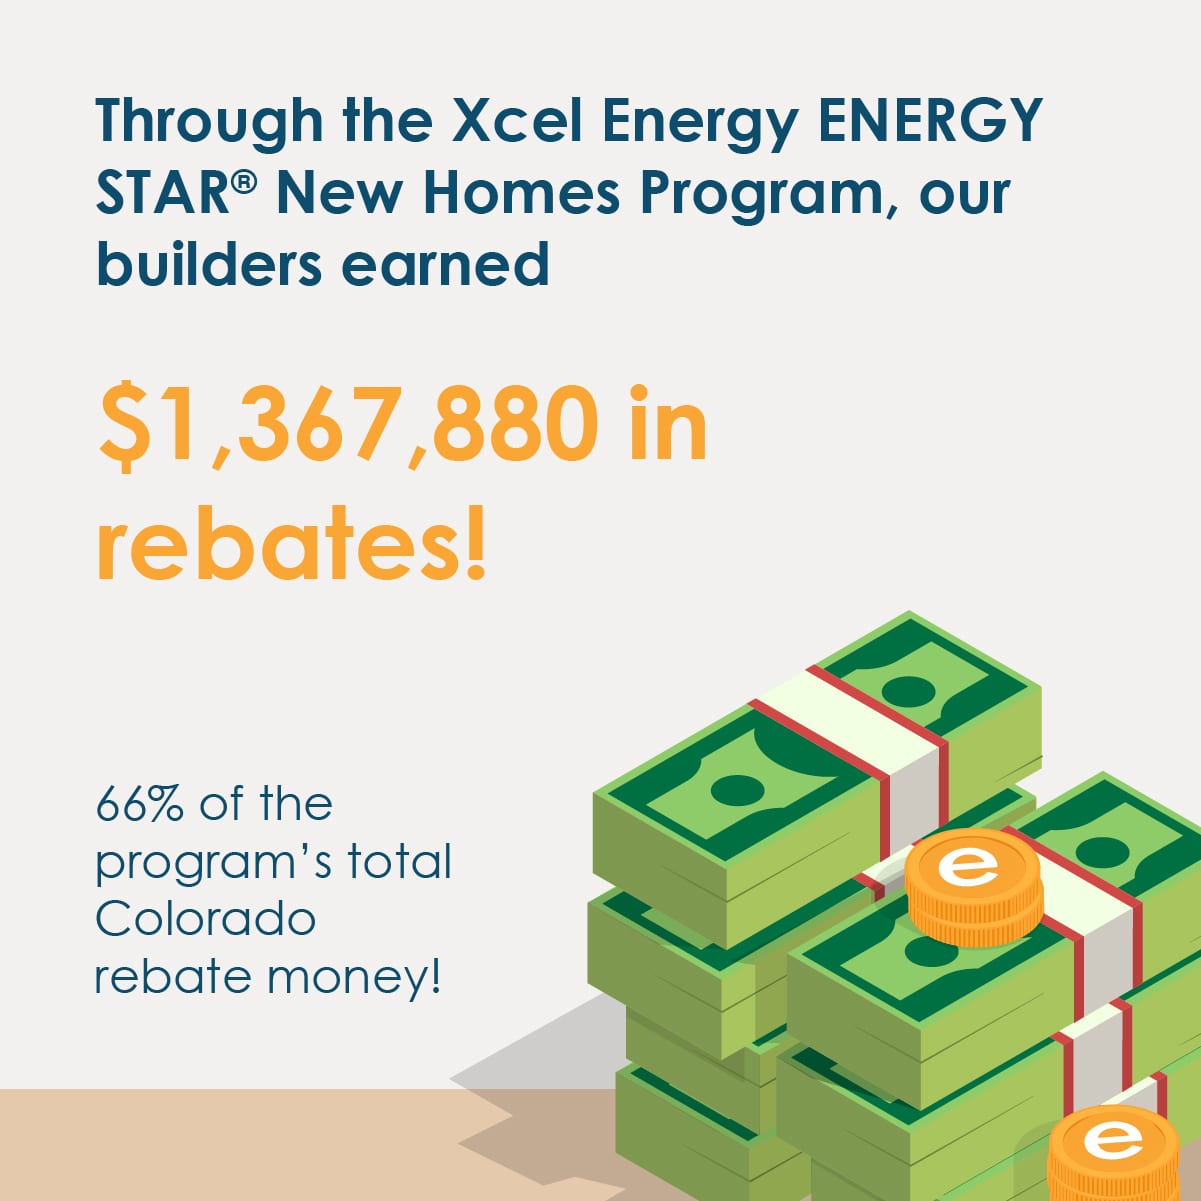 EnergyLogic helped Colorado builders earn over a million dollars in Xcel Energy ENERGY STAR New Homes Program rebates